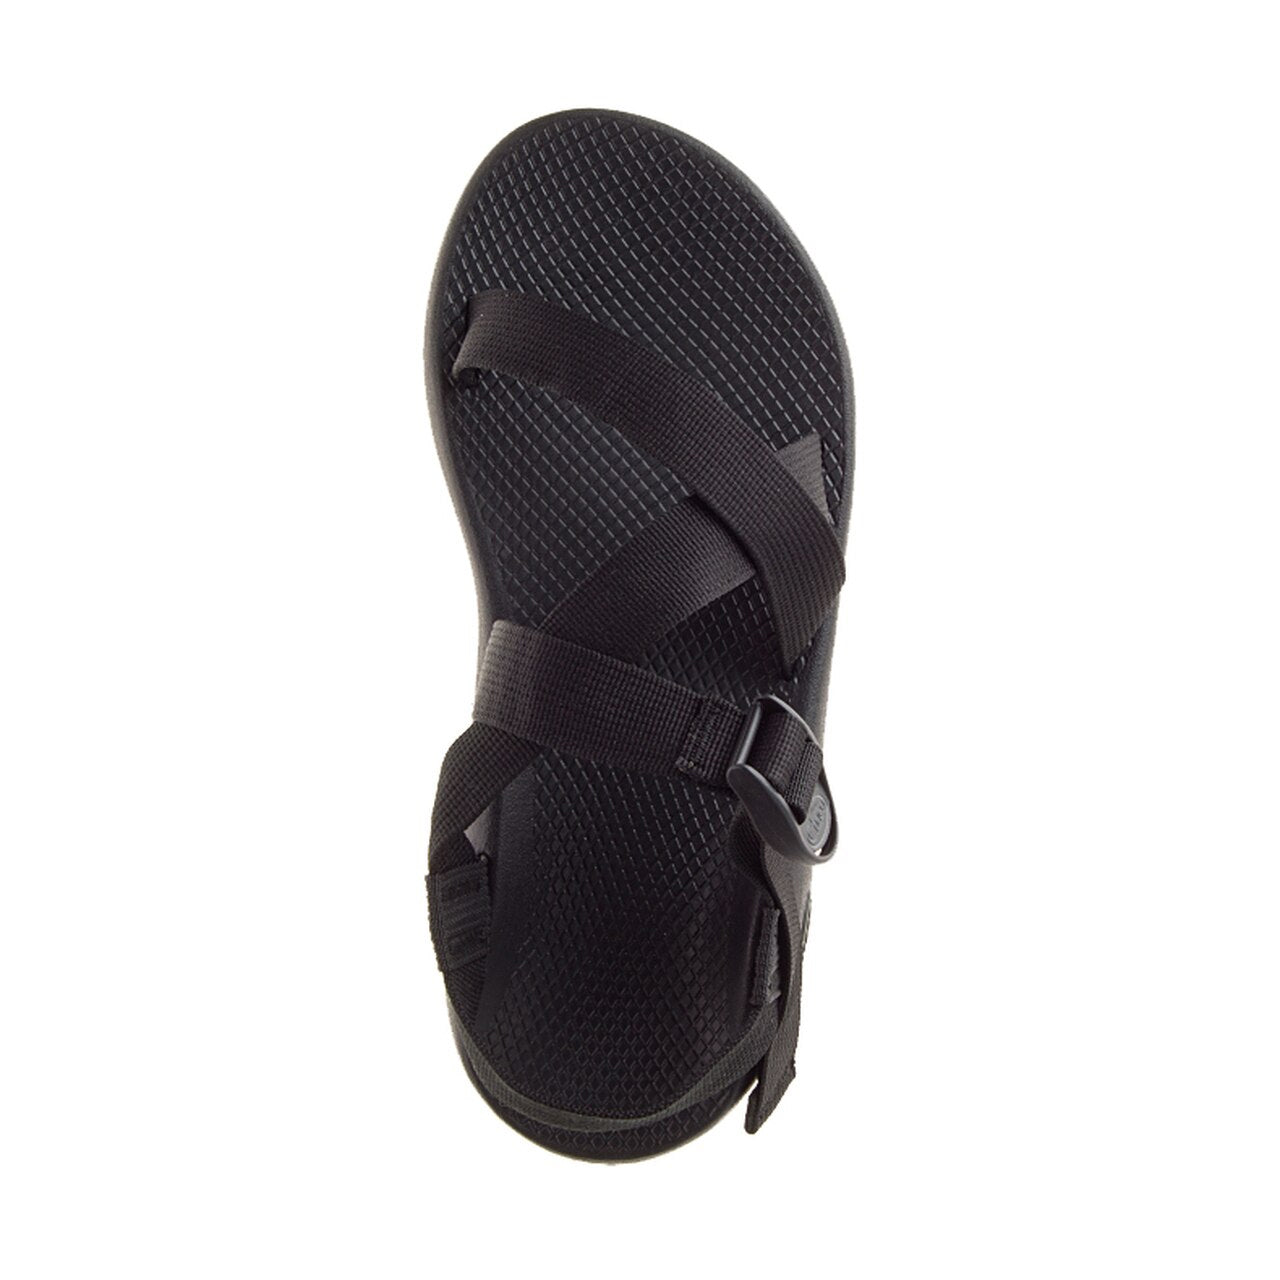 Chaco Z/1 Classic Sandal